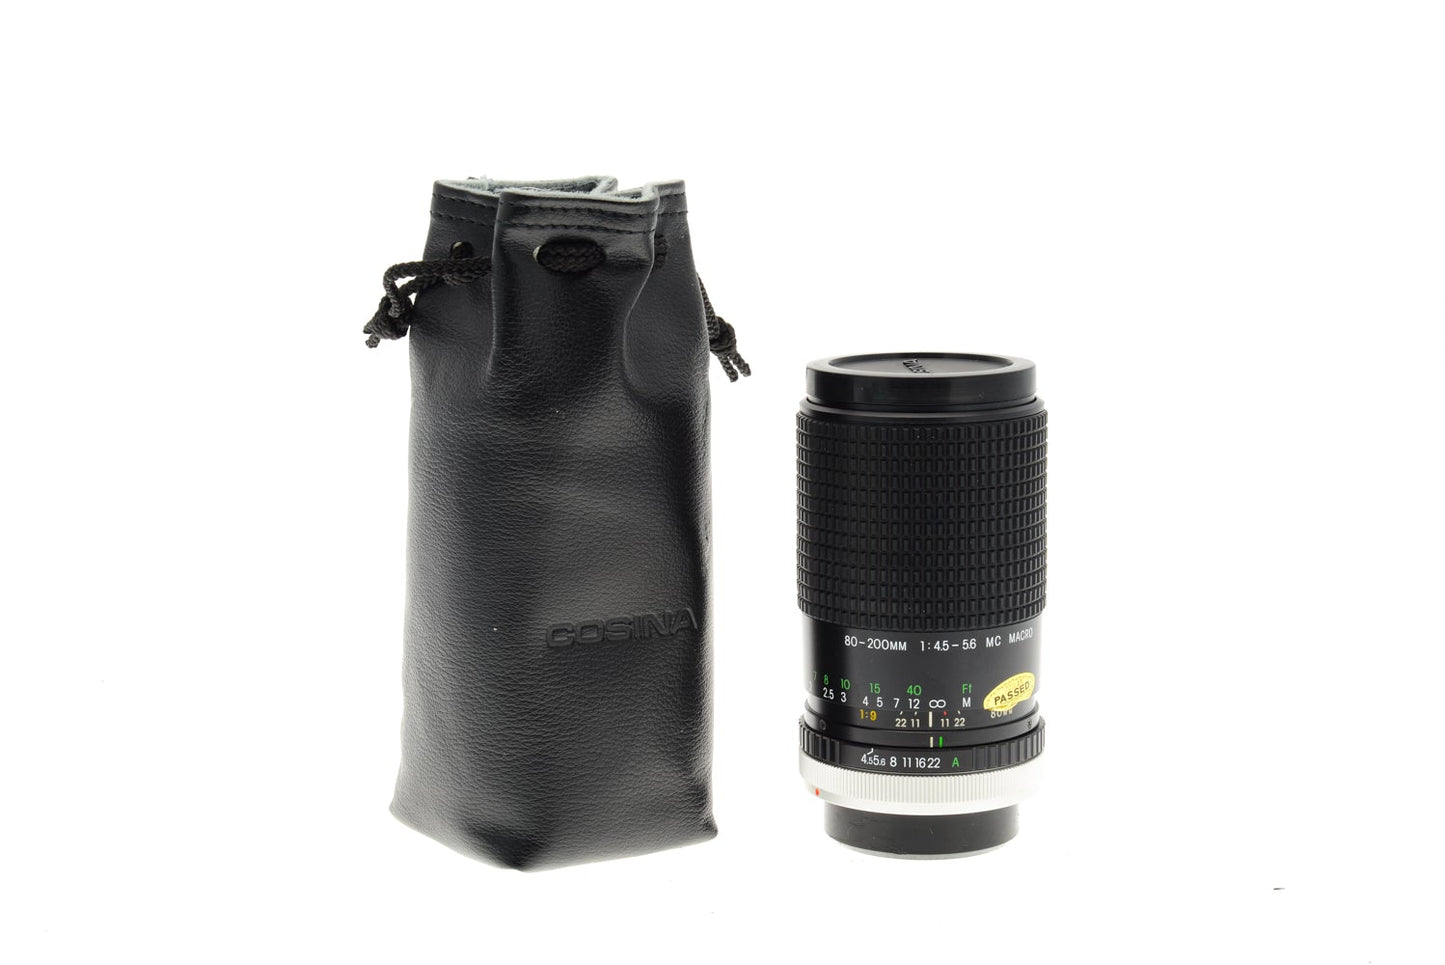 Cosina 80-200mm f4.5-5.6 Super Macro - Lens